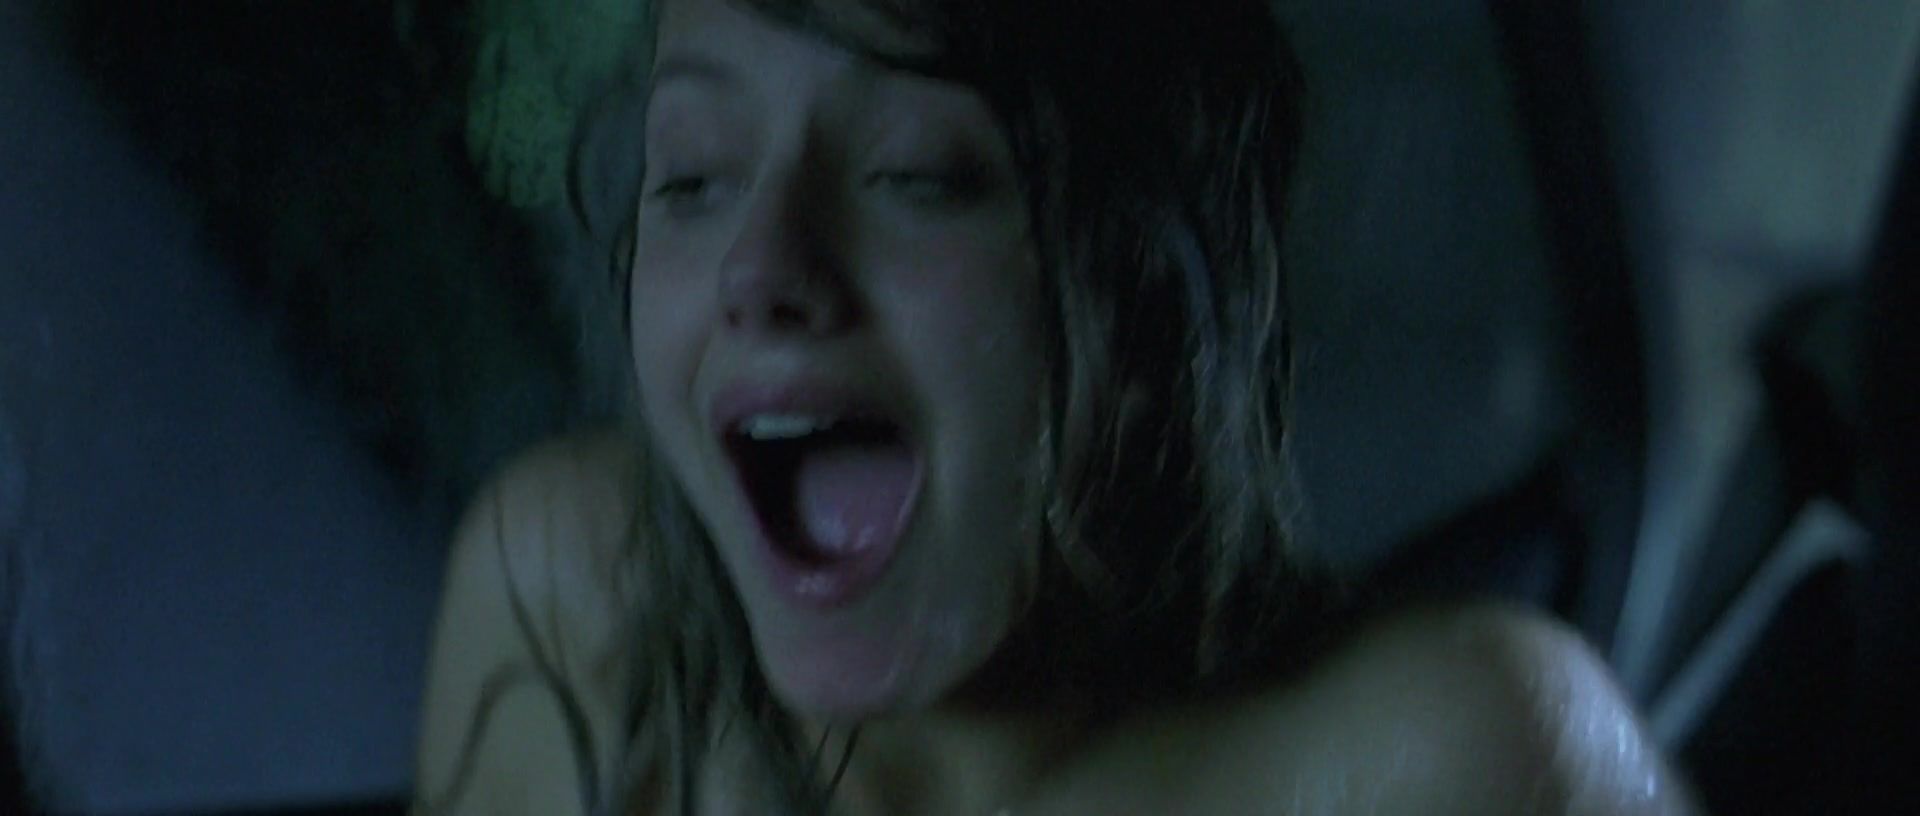 Argenta Naked Melanie Laurent from French movie "Je vais bien, ne t'en fais pas" | Released in 2006 BootyFix